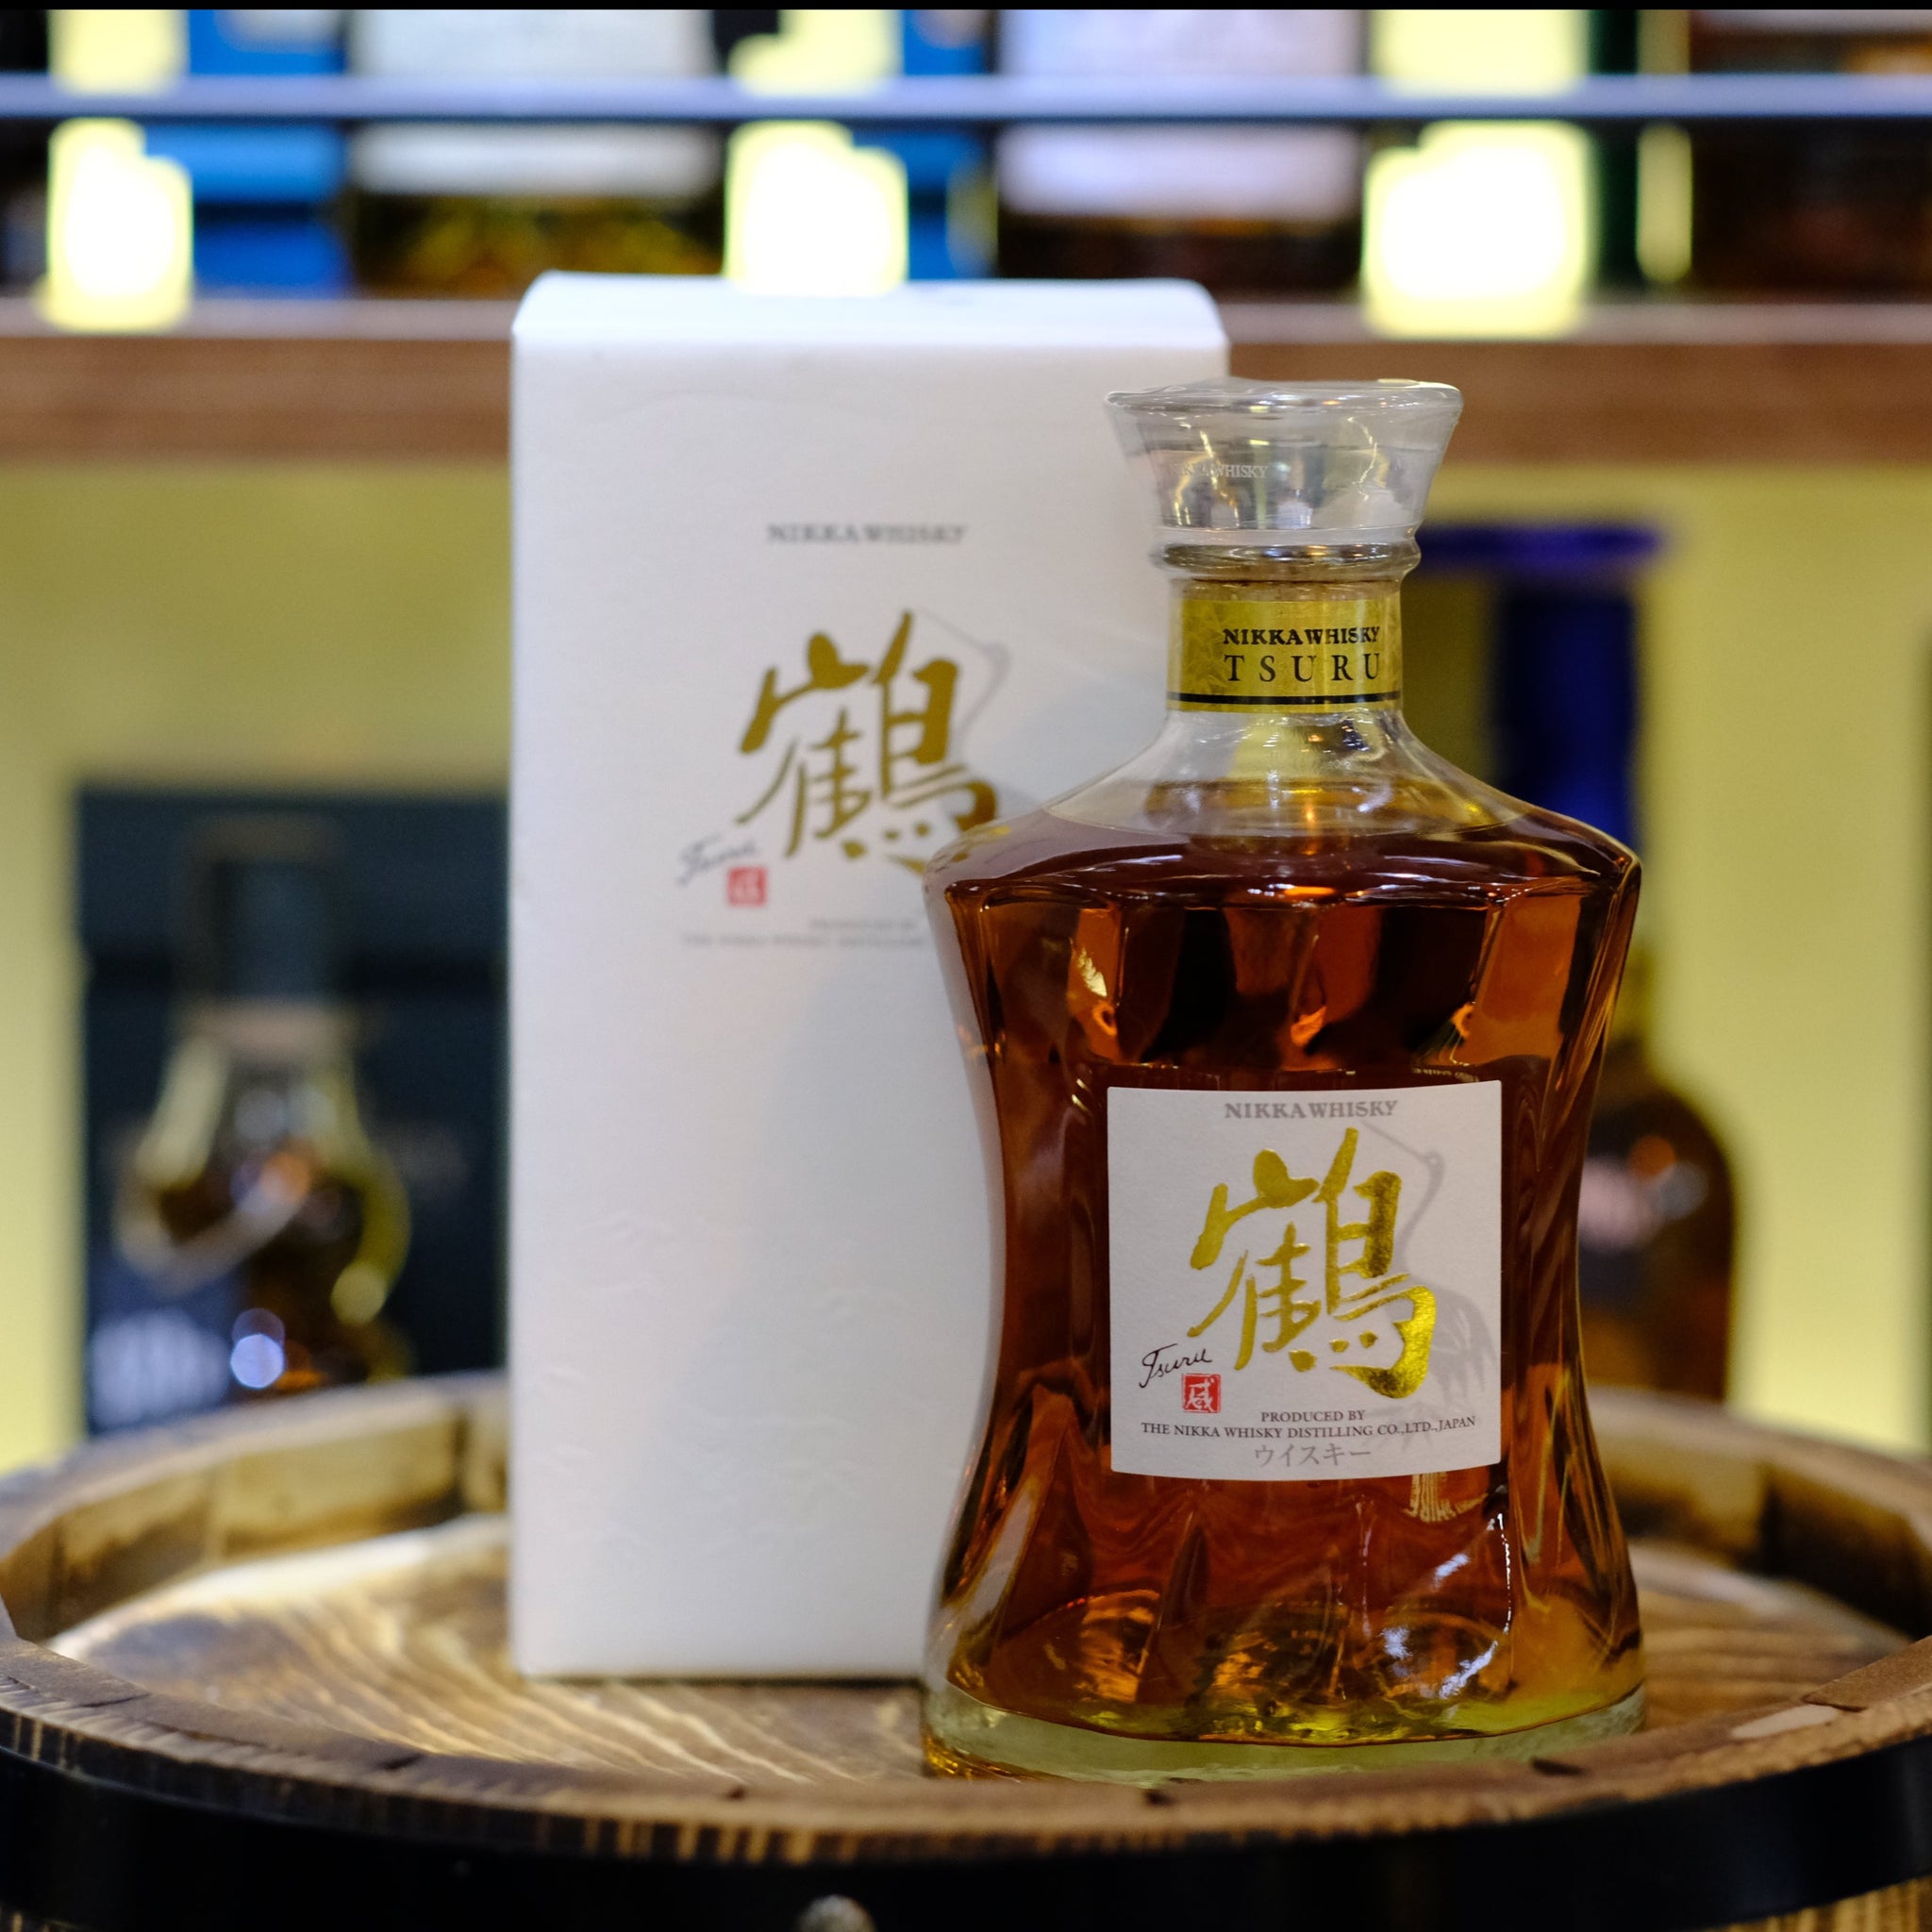 The Nikka Tsuru 鶴 Pure Malt Japanese Whisky